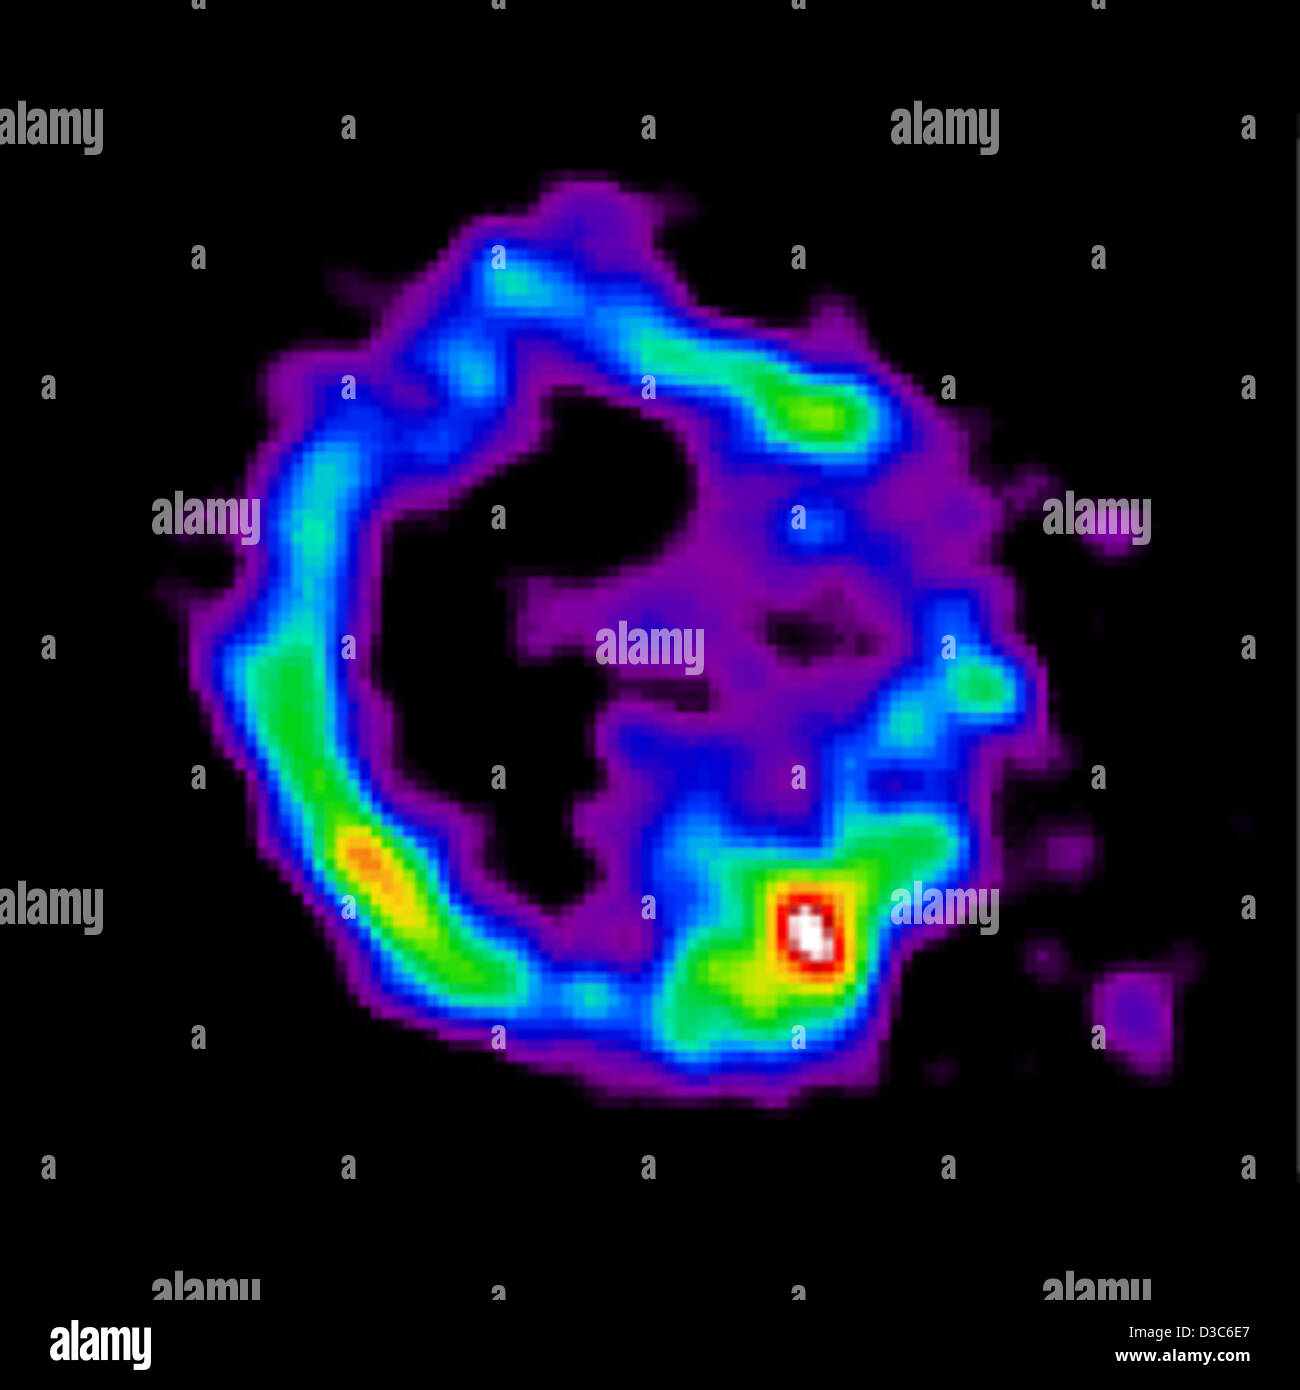 E0102-72,3 Small Magellanic Cloud astronomia osservatorio a raggi x chandra chandra-x-ray telescope chandraxrayobservatory chandraxray Foto Stock